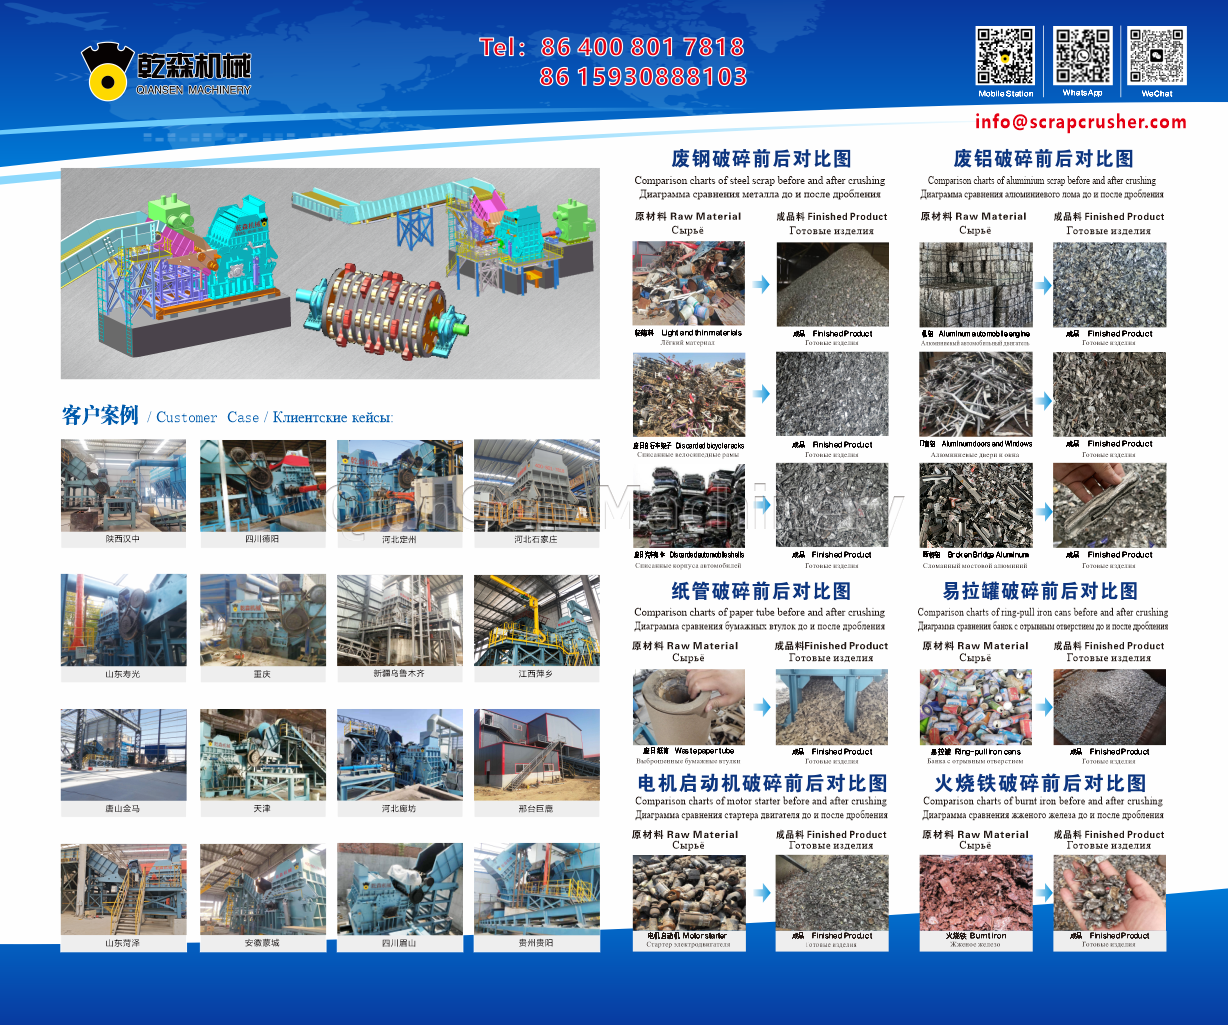 Qiansen Machinery attend the 